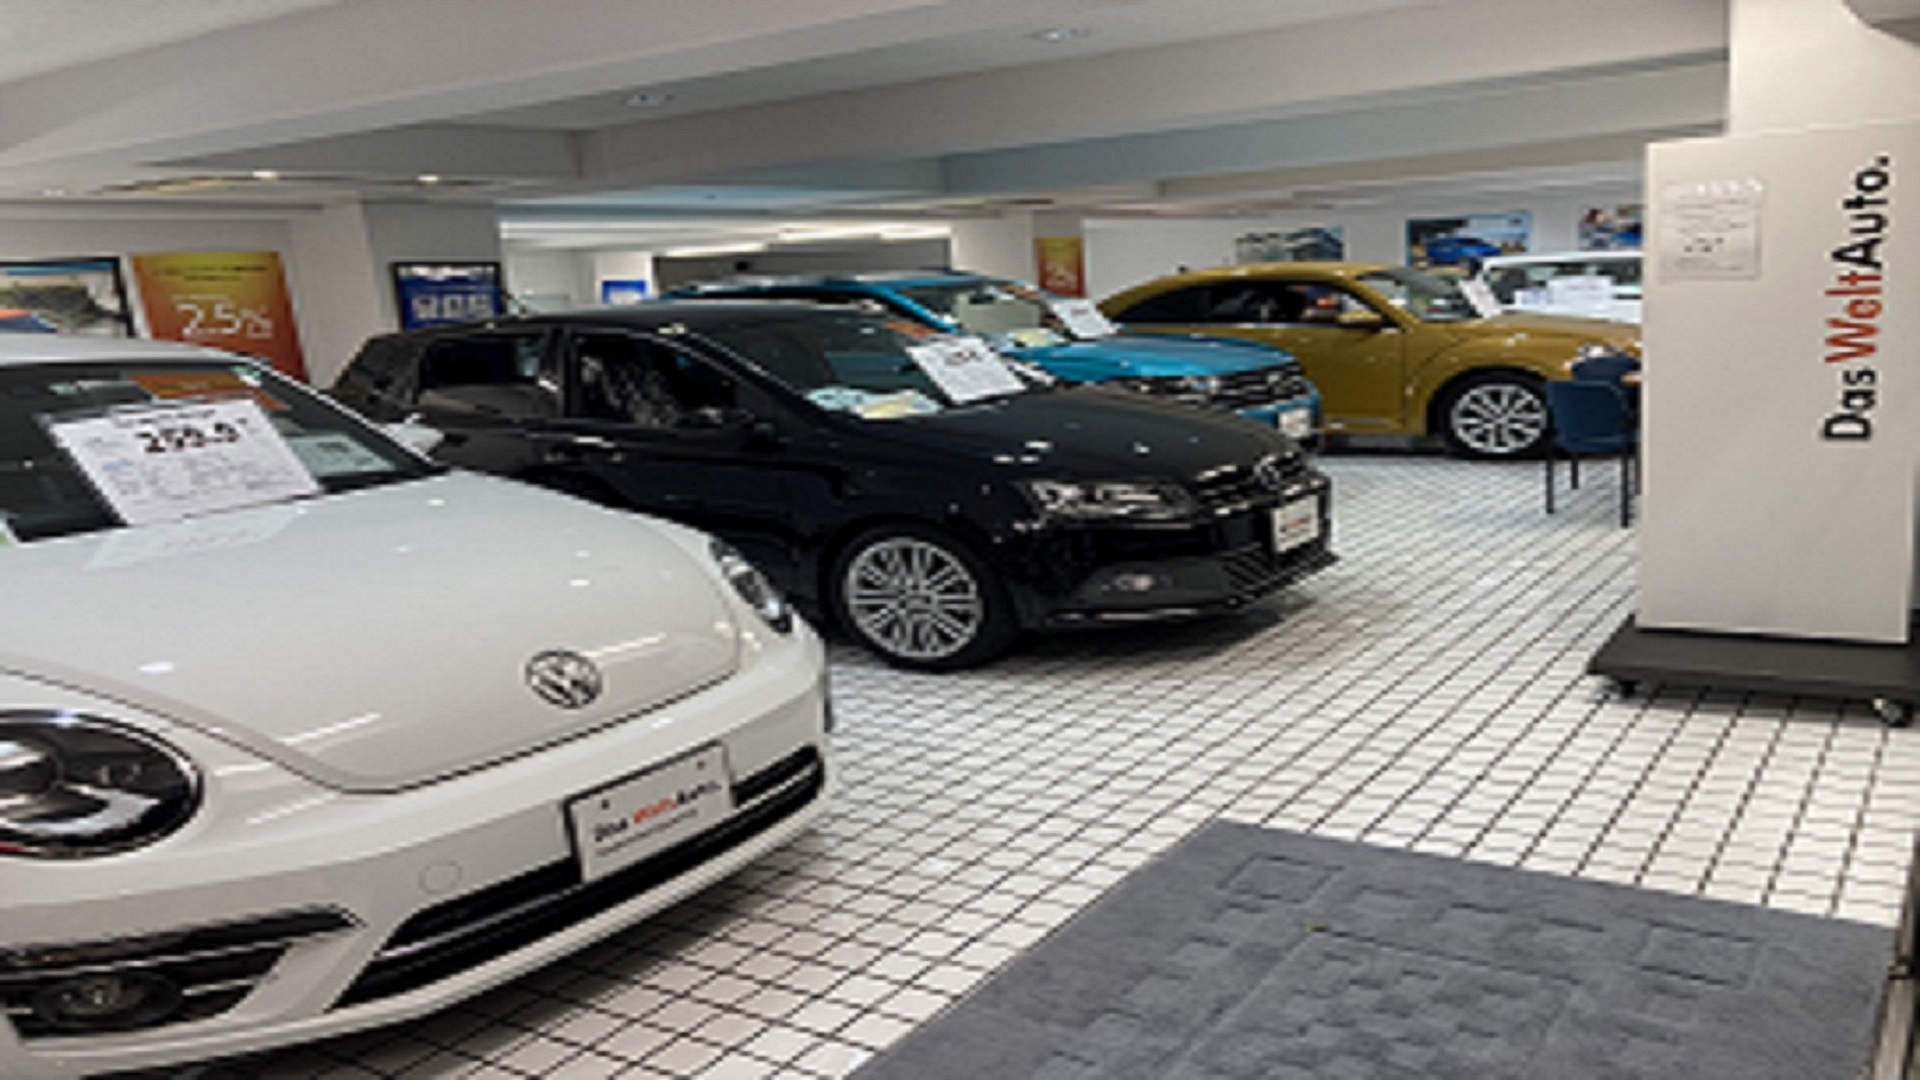 Top Volkswagen杉並 認定中古車センター Volkswagen Suginami Guaranteed Used Car Center